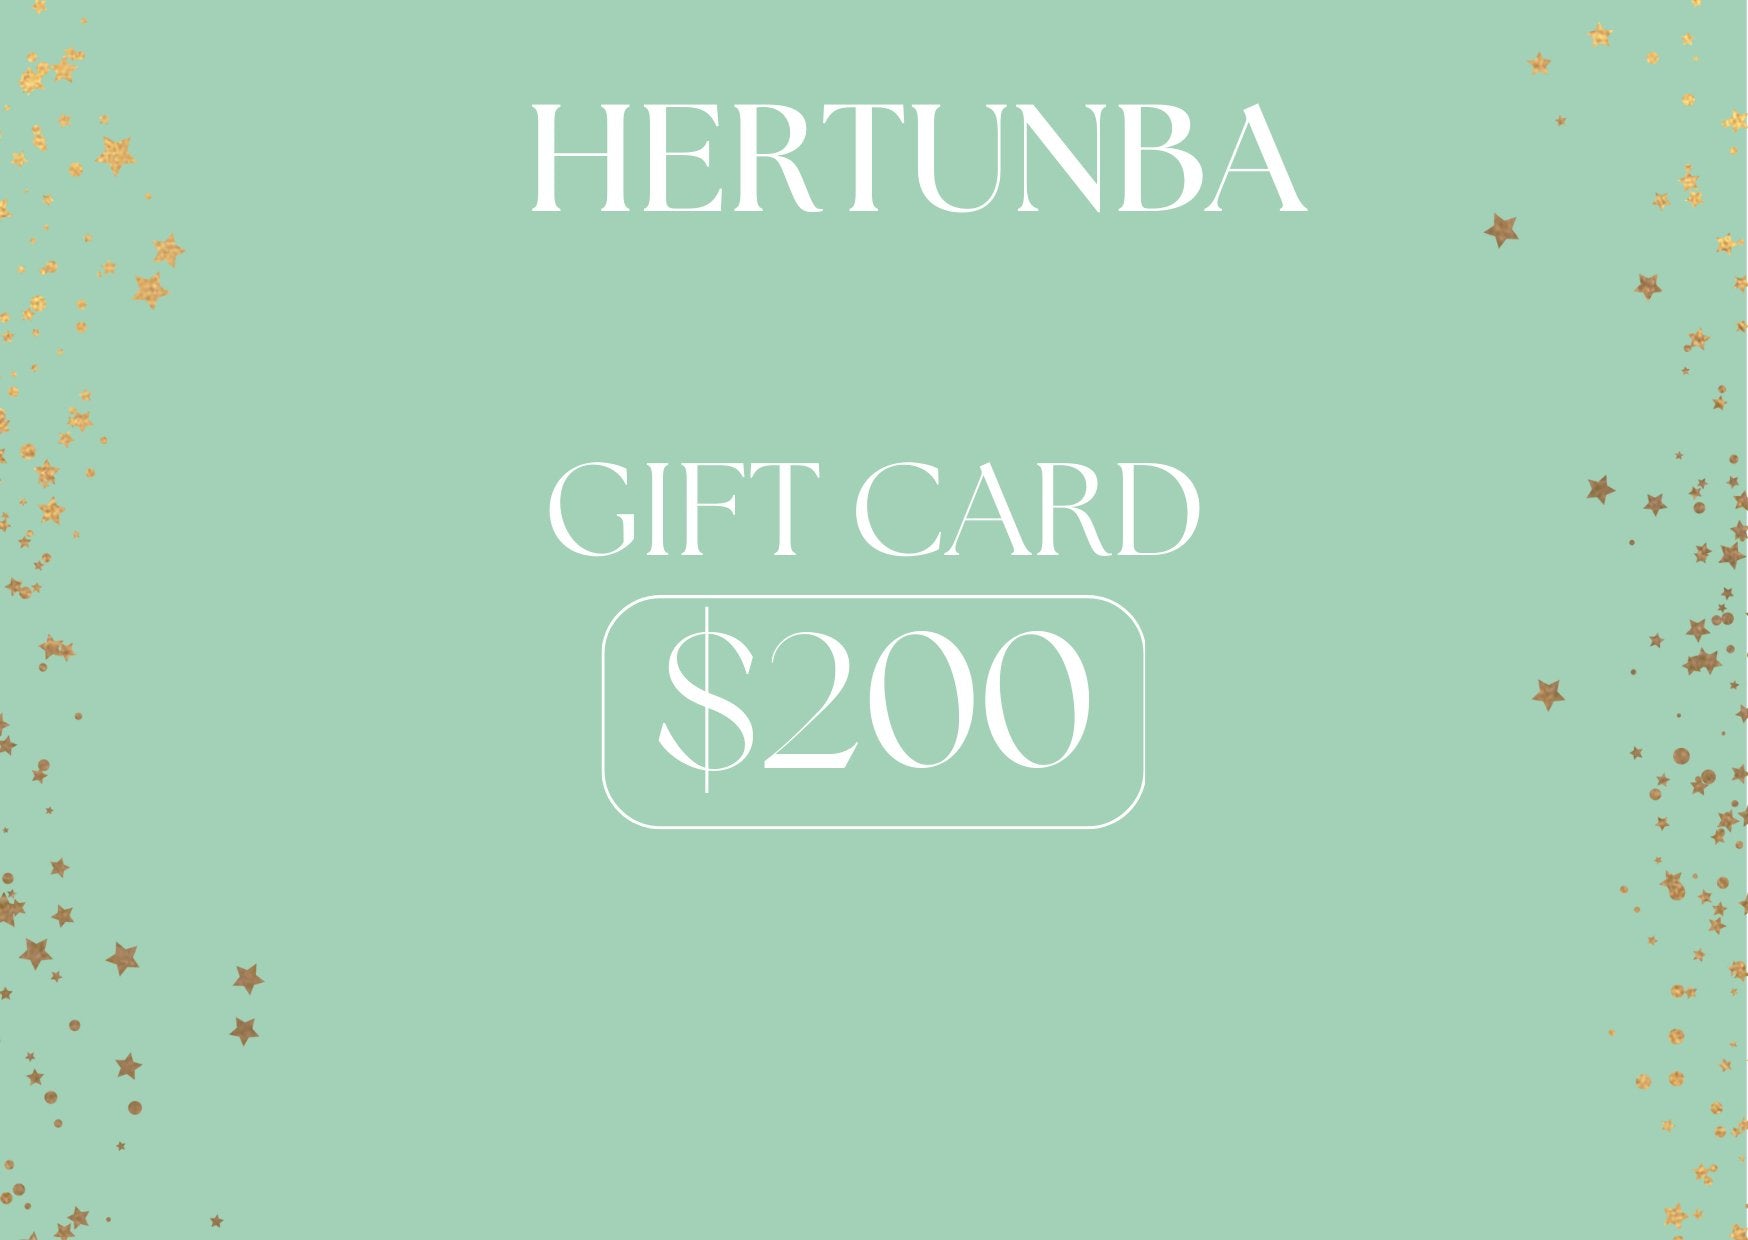 Gift Card - Hertunba